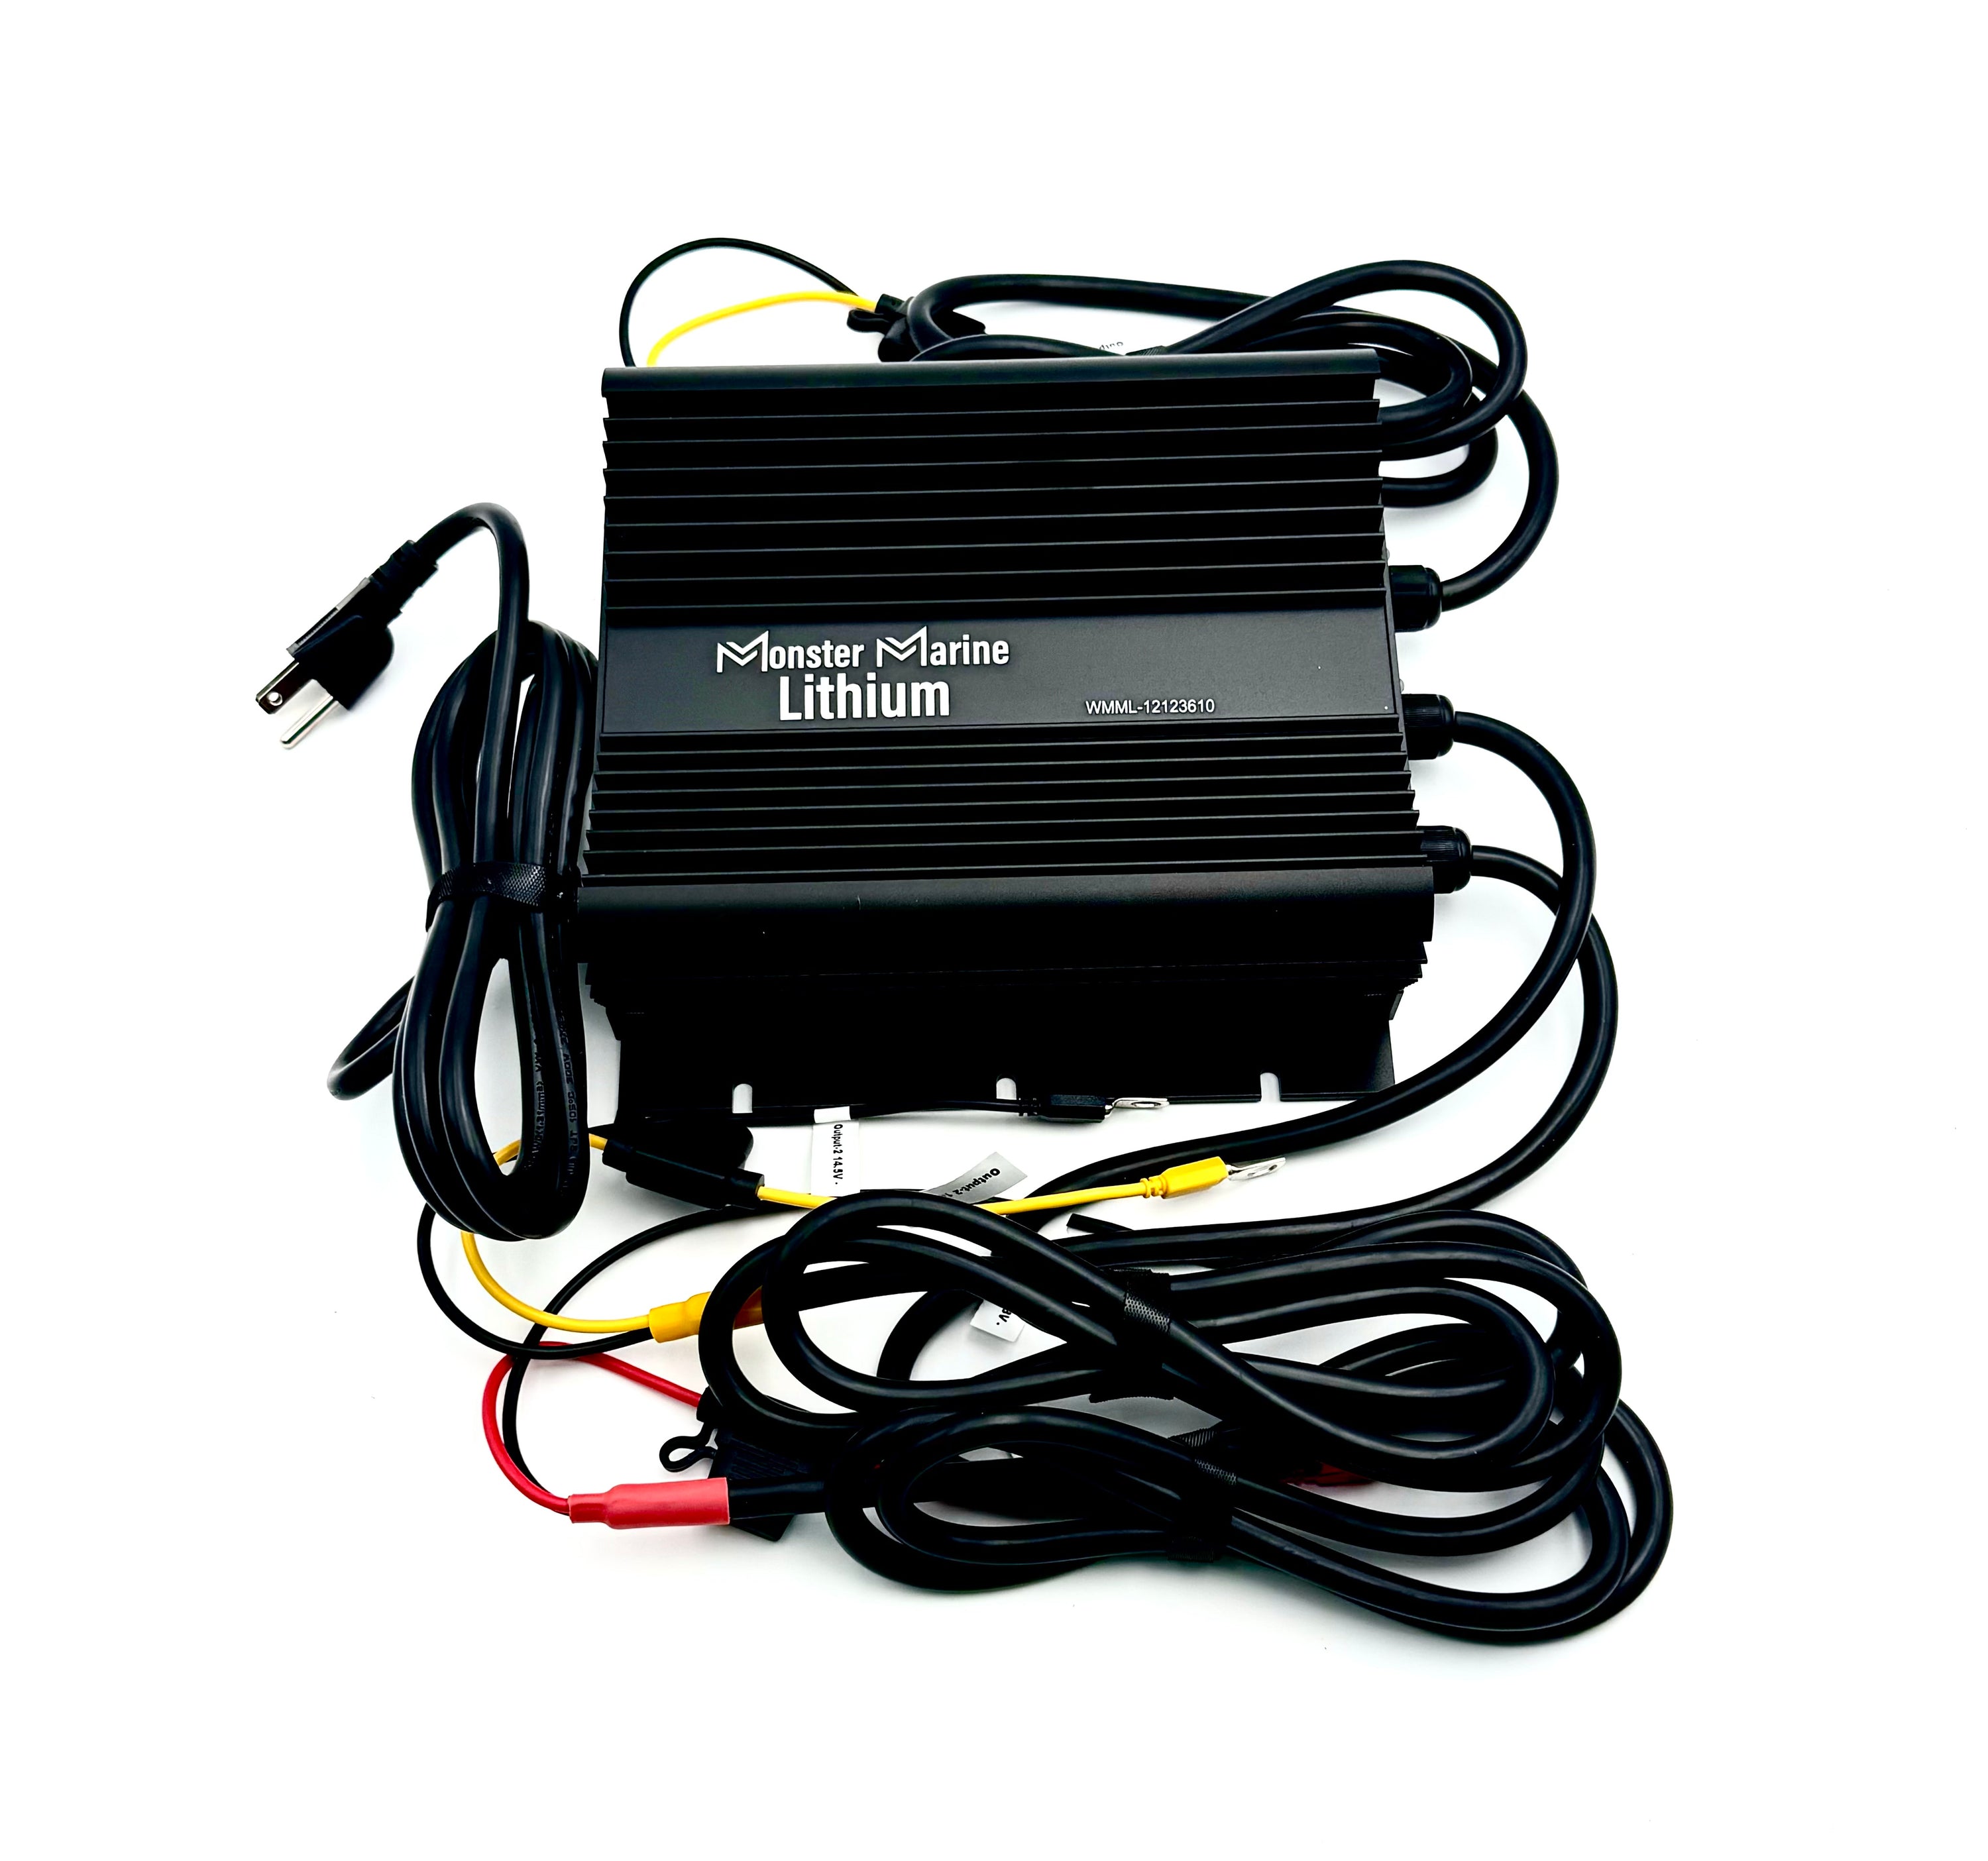 Triple Bank 12v, 12v & 36v marine waterproof AGM/Lithium charger